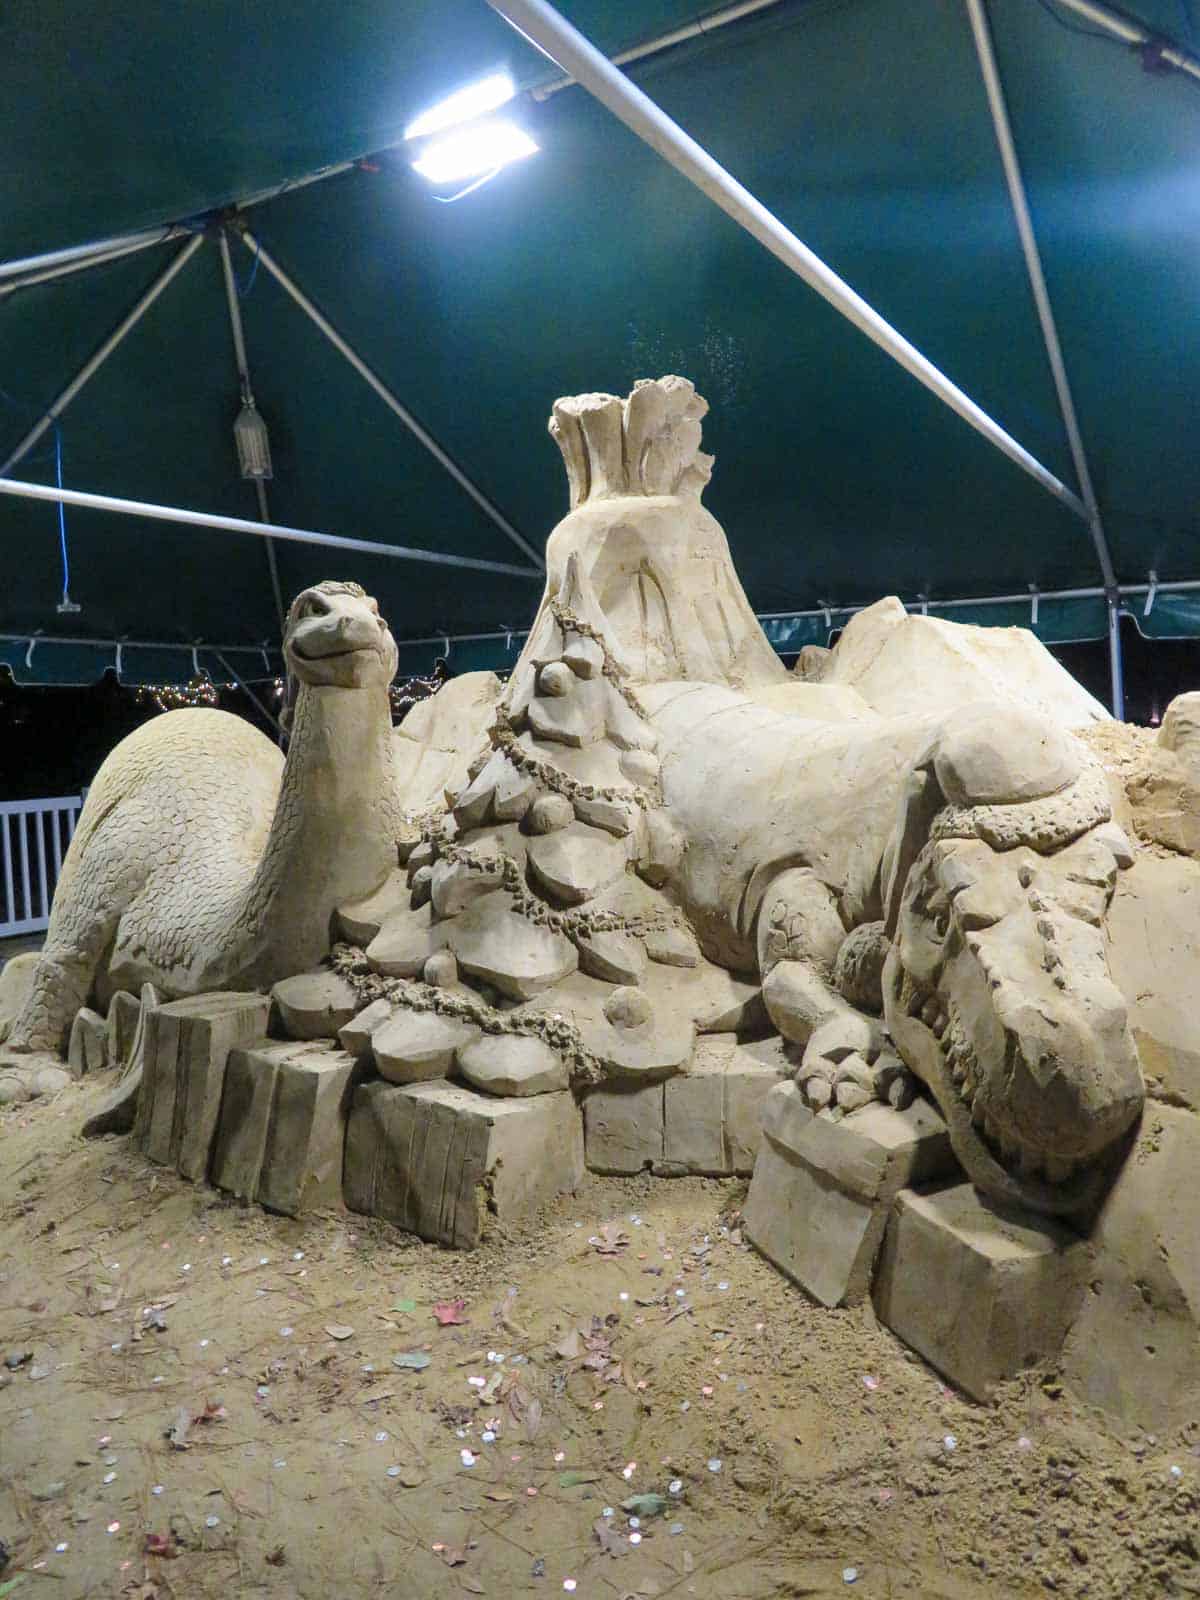 Giant sand sculpture with Christmas tree, alligator, dinosaur